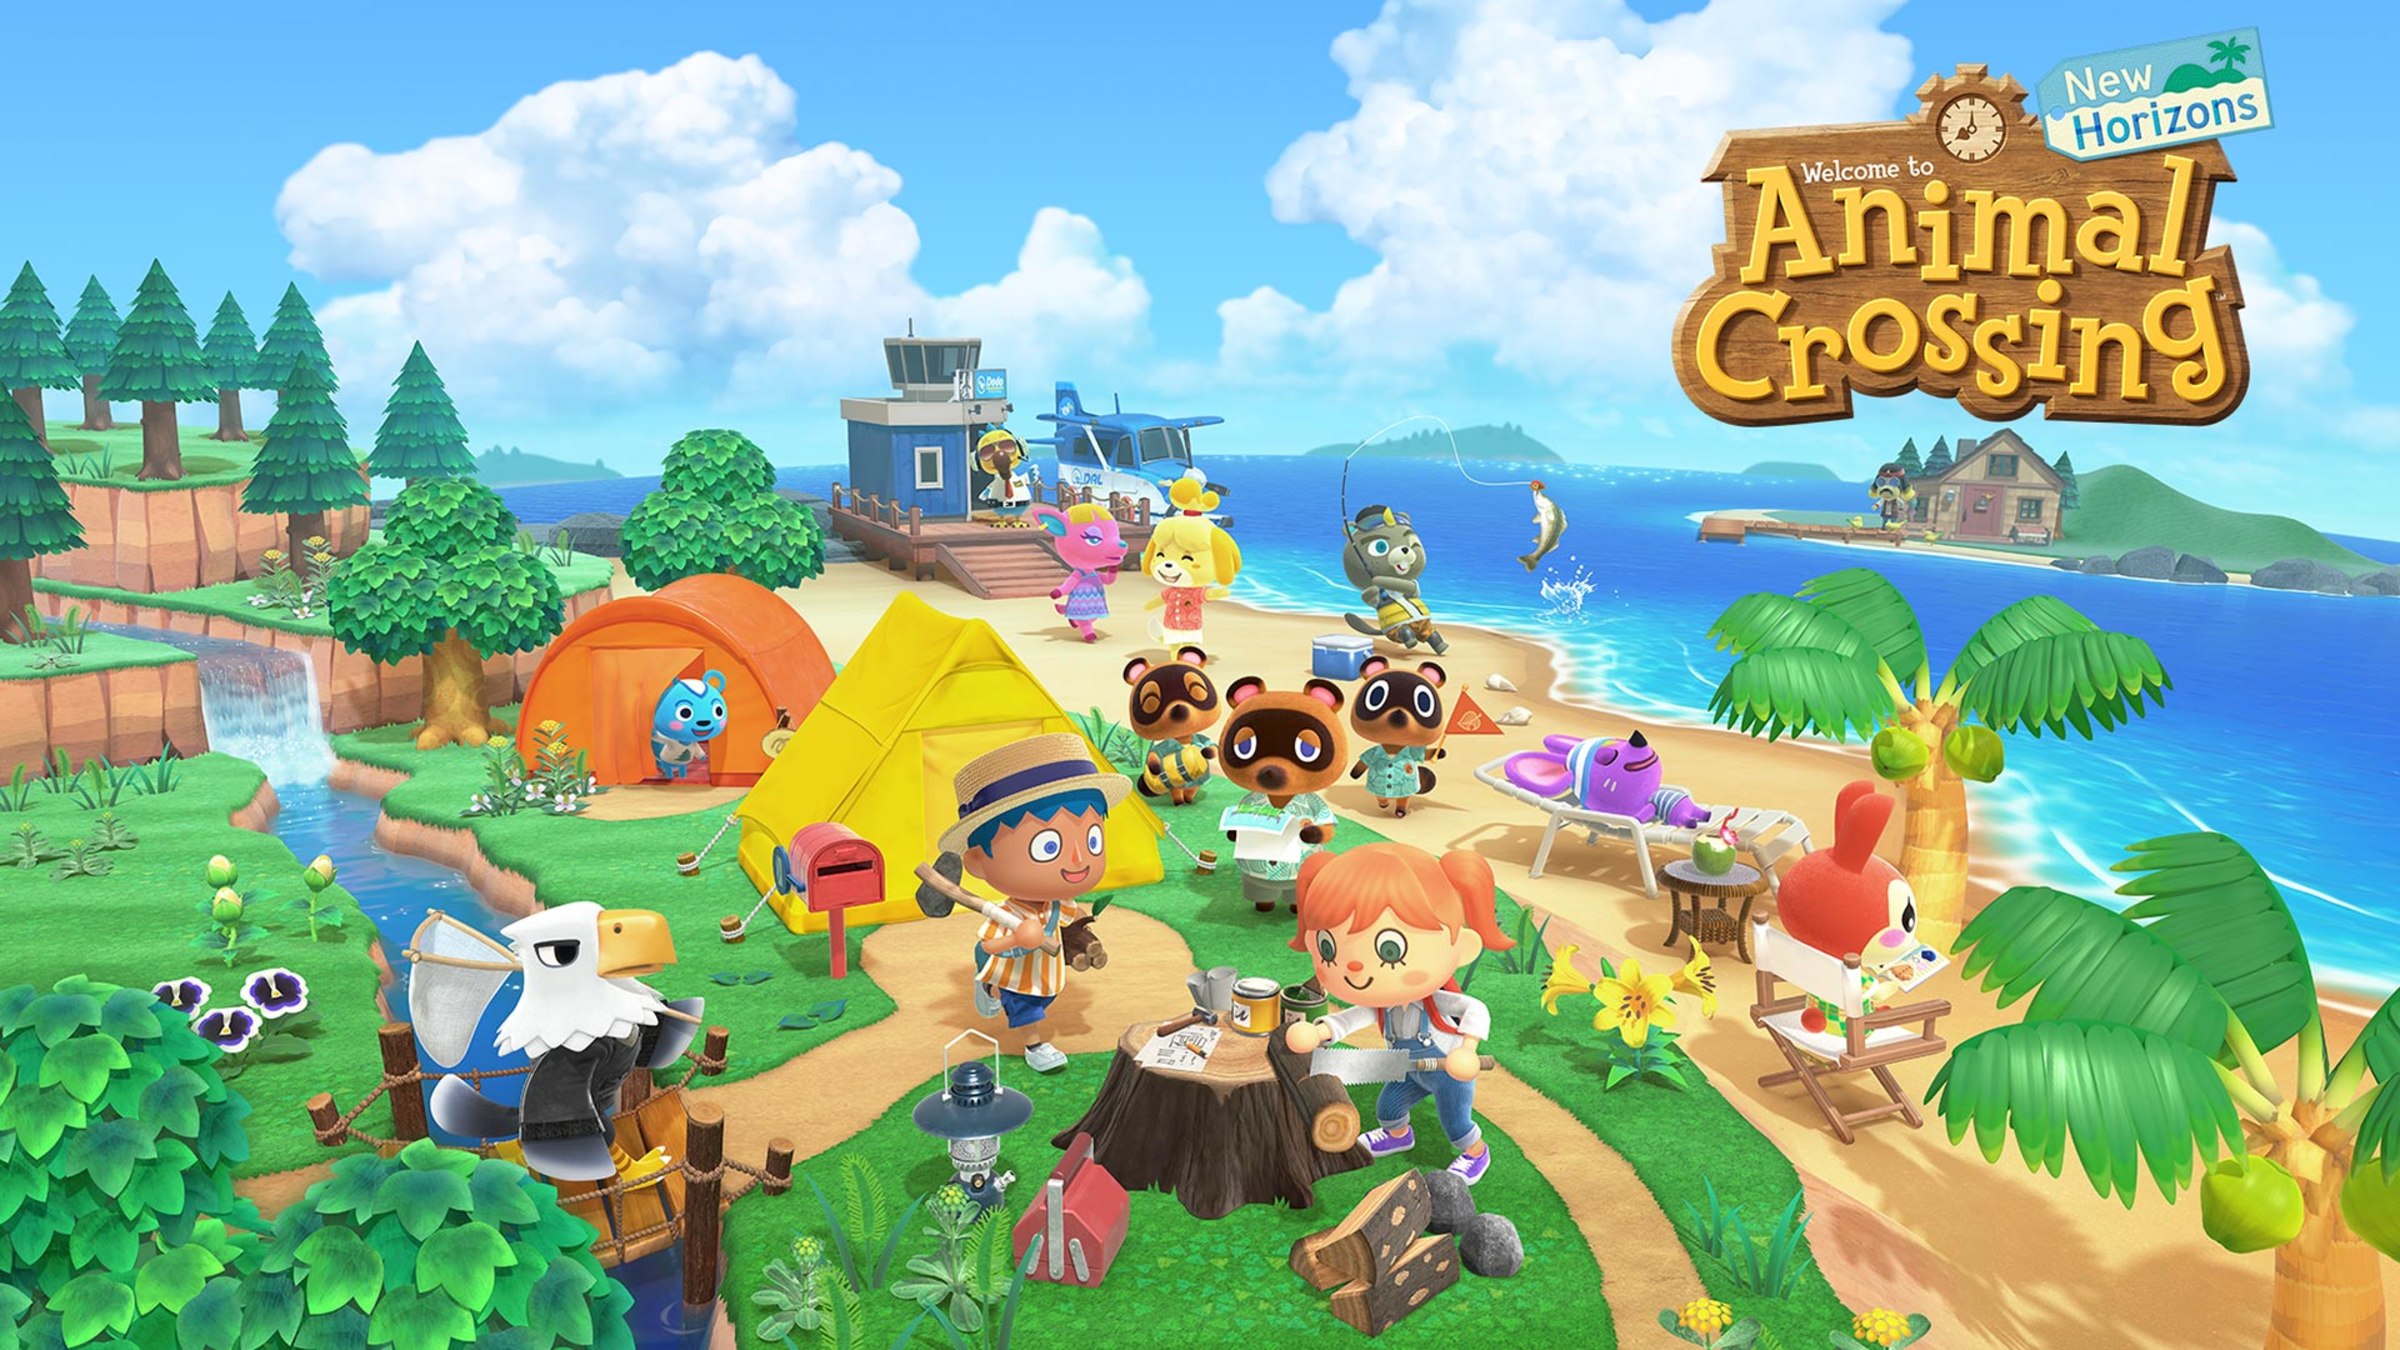 Jogo Animal Crossing: New Horizons - Nintendo Switch